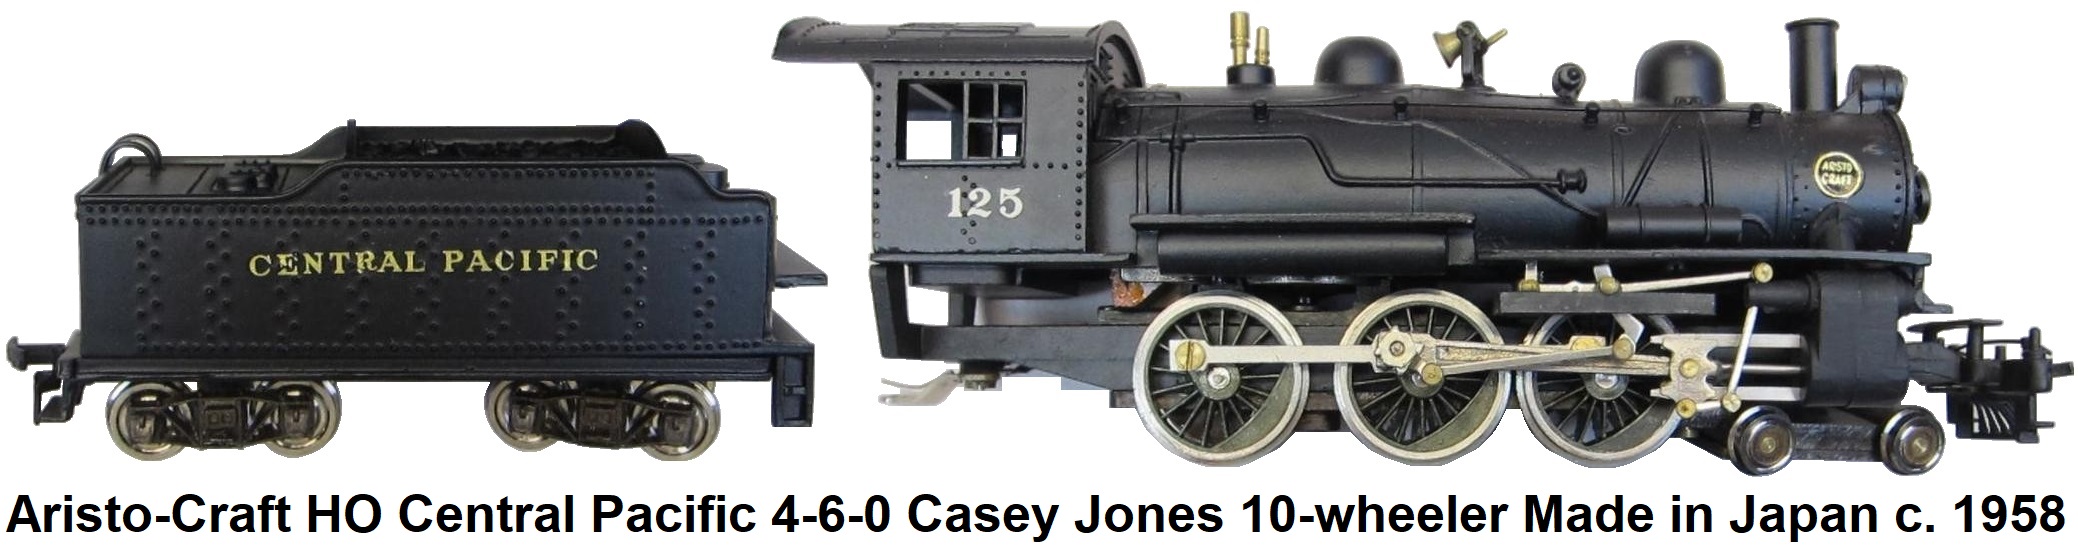 2 Aristocraft Crest Polk Smoke Unit Heating Element W/ Wick G Scale Train 29313 